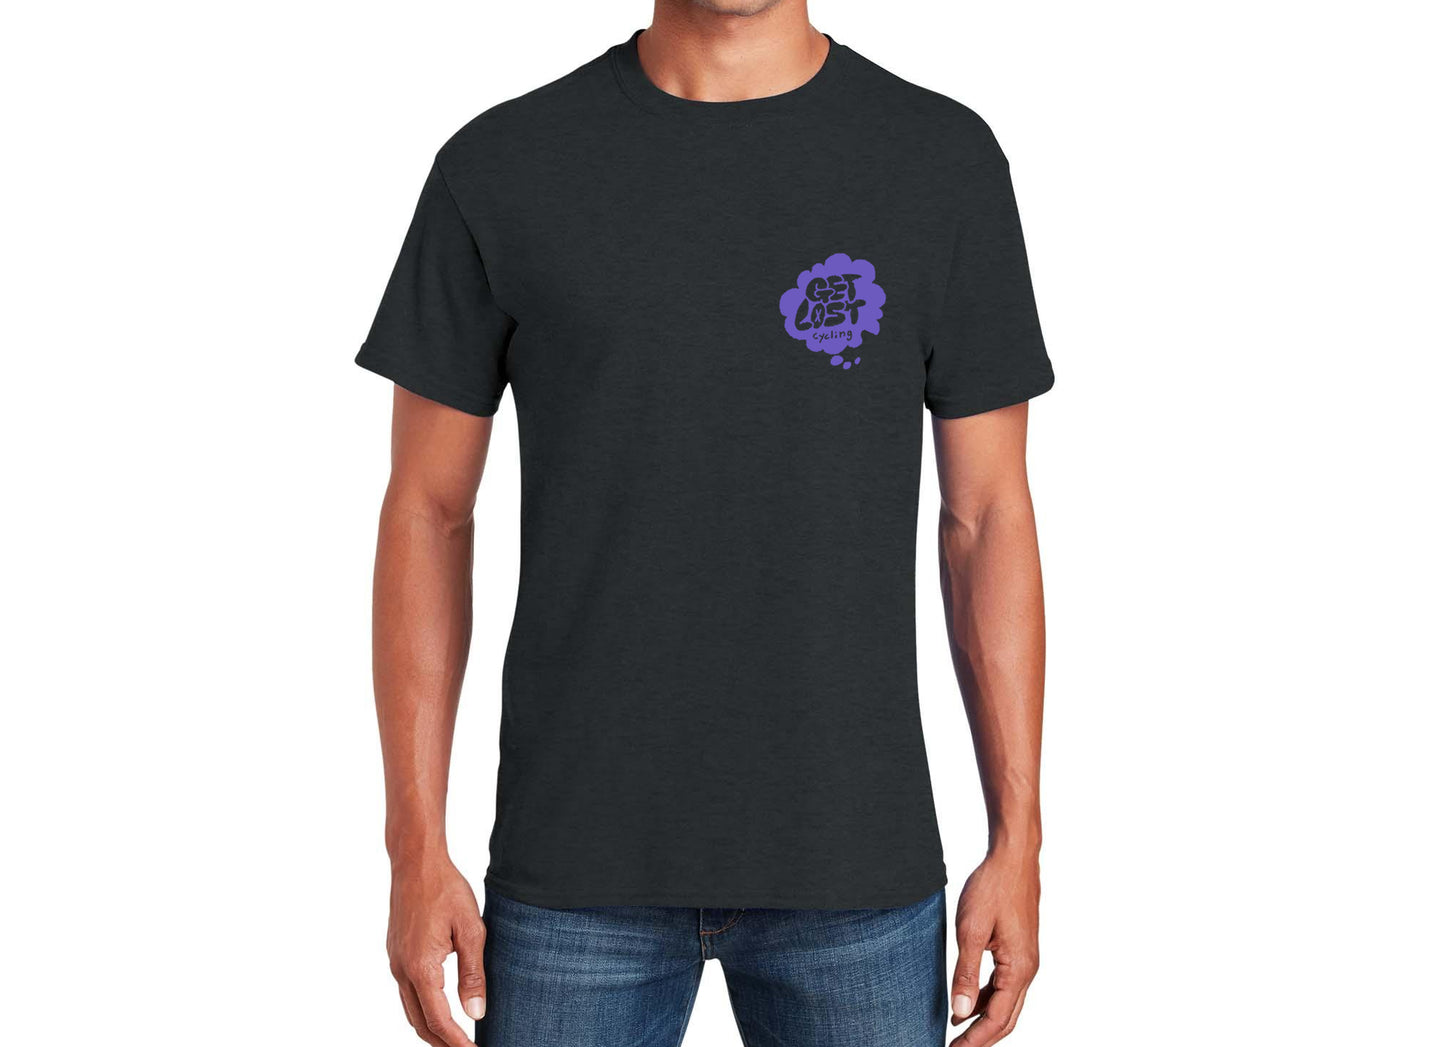 Get Lost Cycling T-Shirt - Black & Purple